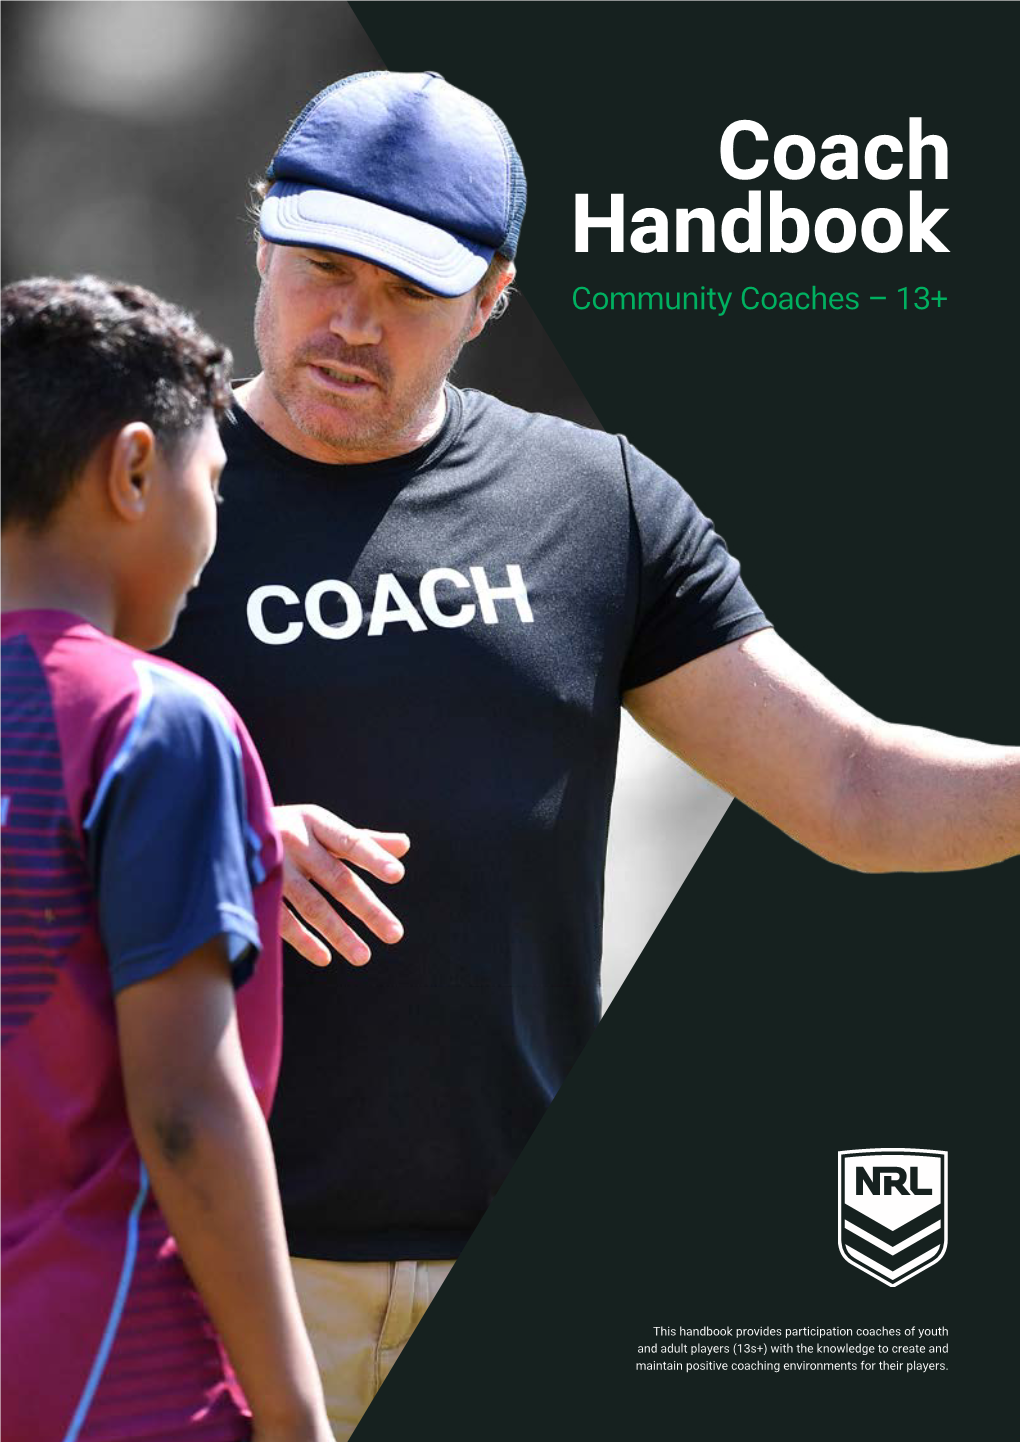 Coach Handbook Community Coaches – 13+